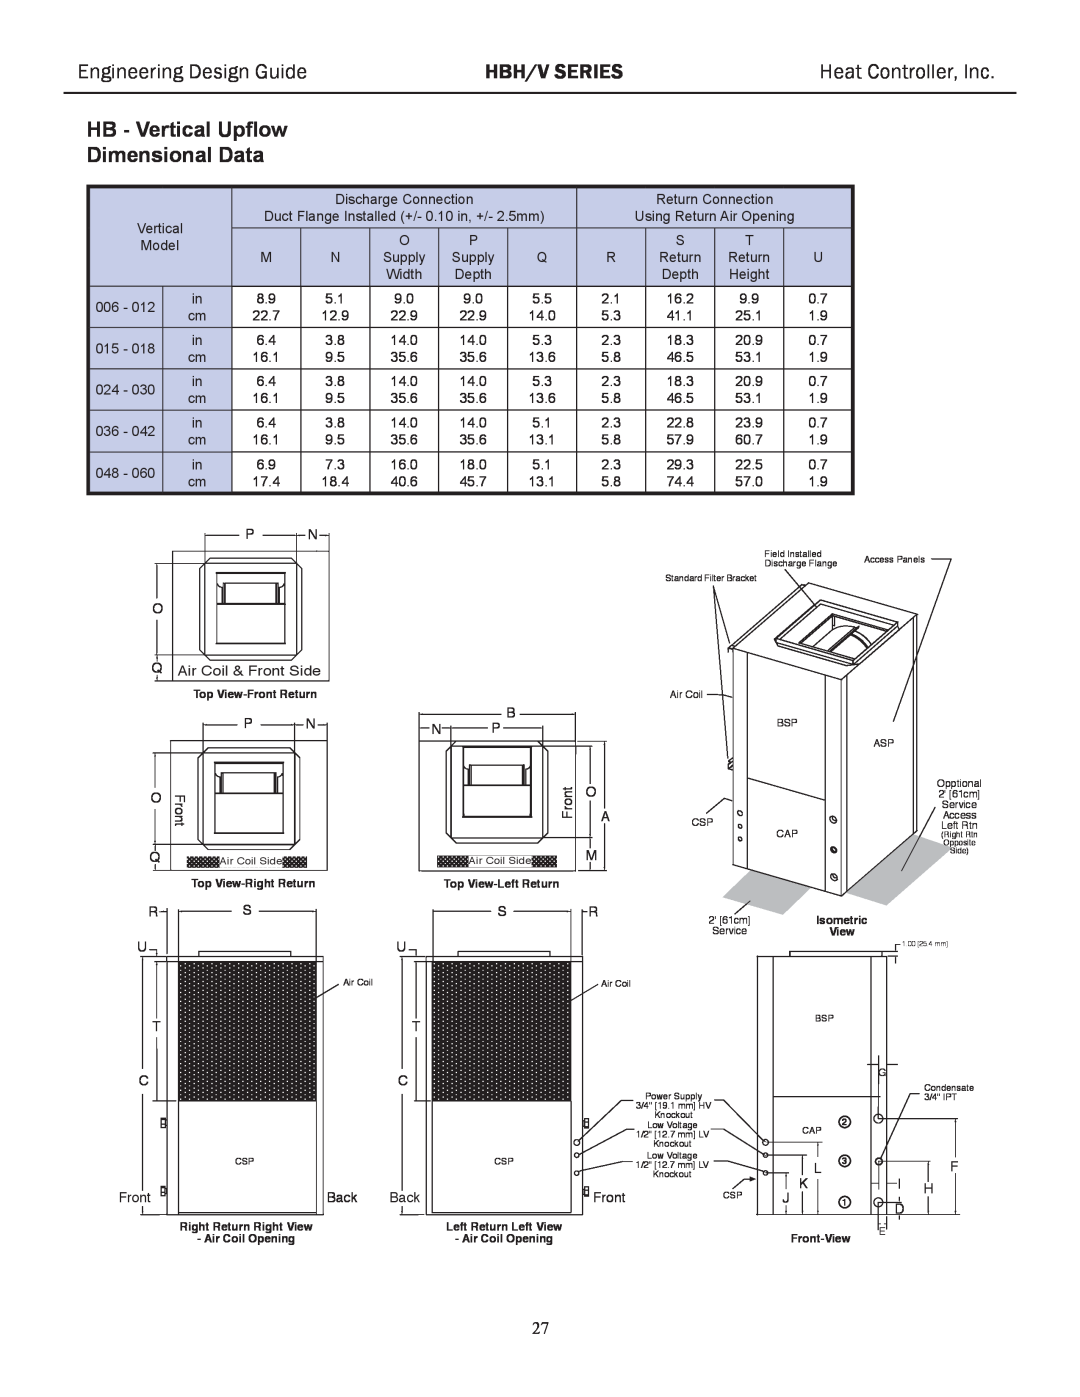 Heat Controller HBH/V HB - Vertical Upflow, Hbh/V Series, Heat Controller, Inc, Dimensional Data, Engineering Design Guide 